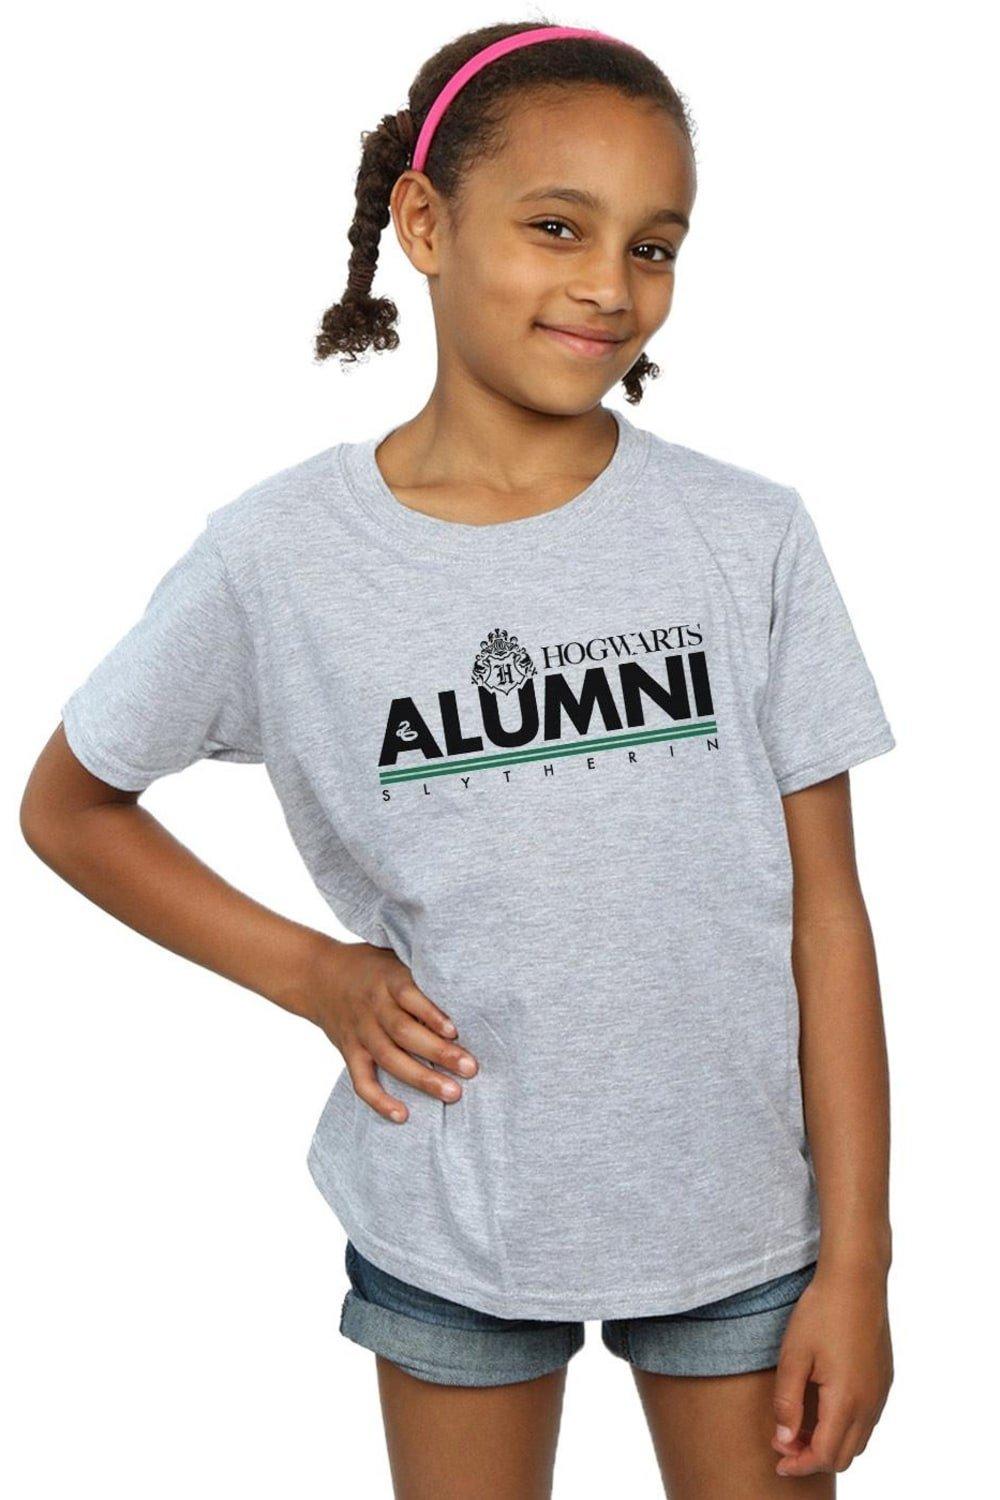 Hogwarts Alumni Slytherin Cotton T-Shirt